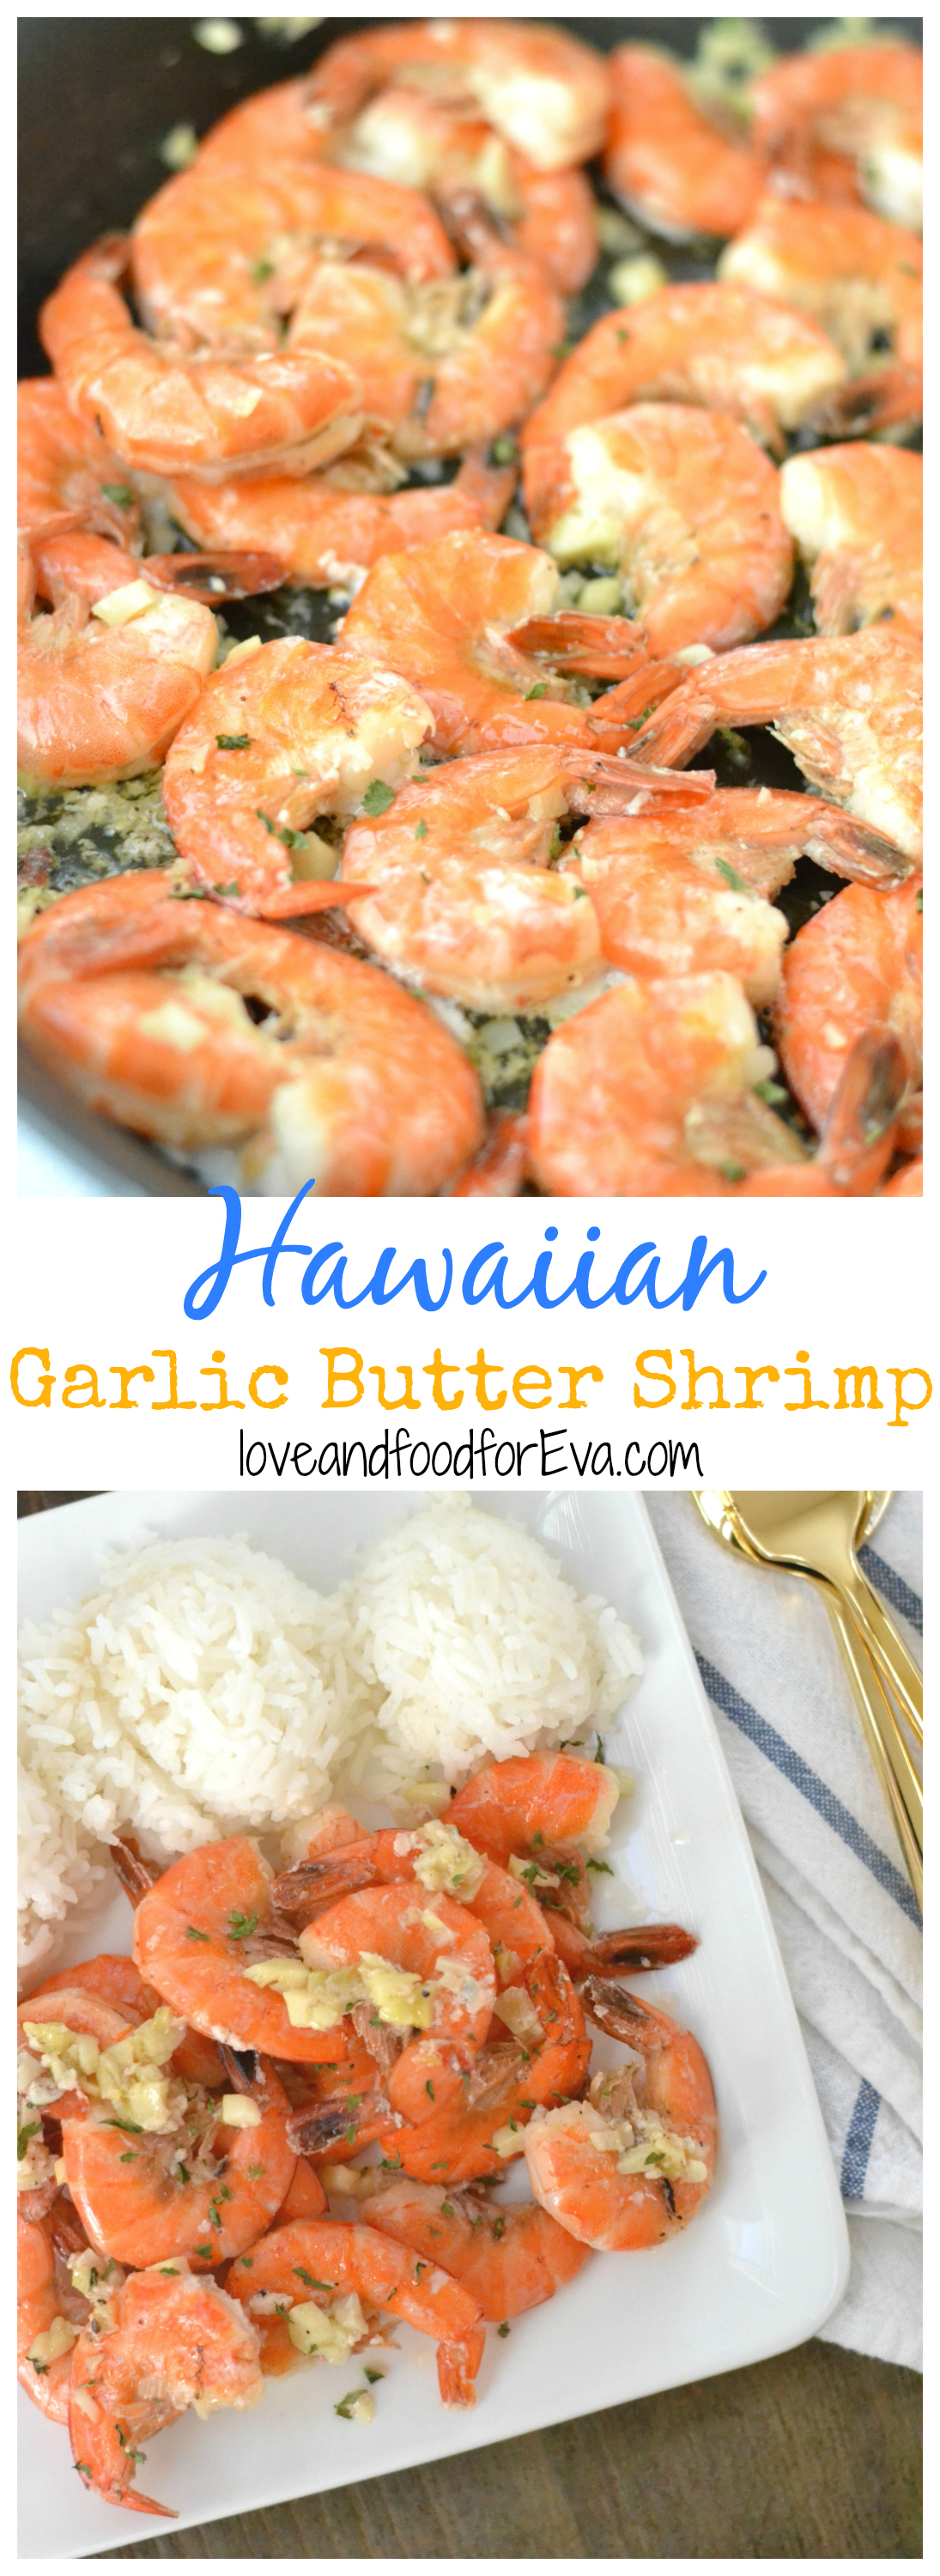 Hawaiian Garlic Butter Shrimp - inspired by the North Shore food trucks in Oahu!